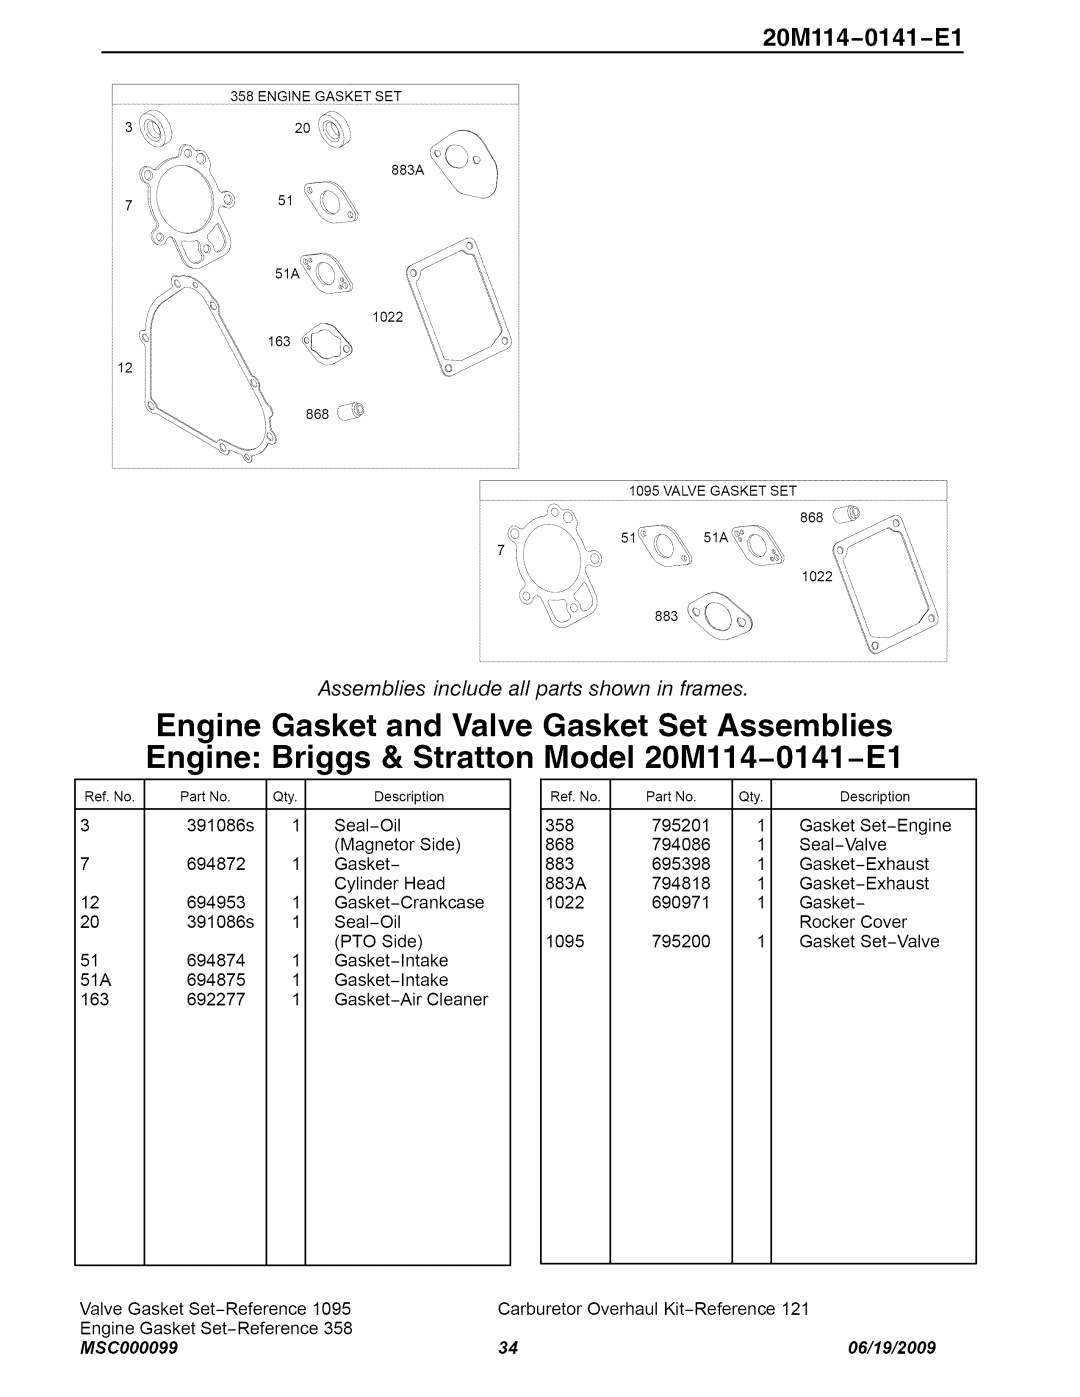 Craftsman C950-52943-0 Briggs & Stratton, Model 20M114-O141-E1, Engine Gasket and Valve Gasket Set Assemblies, MSC000099 